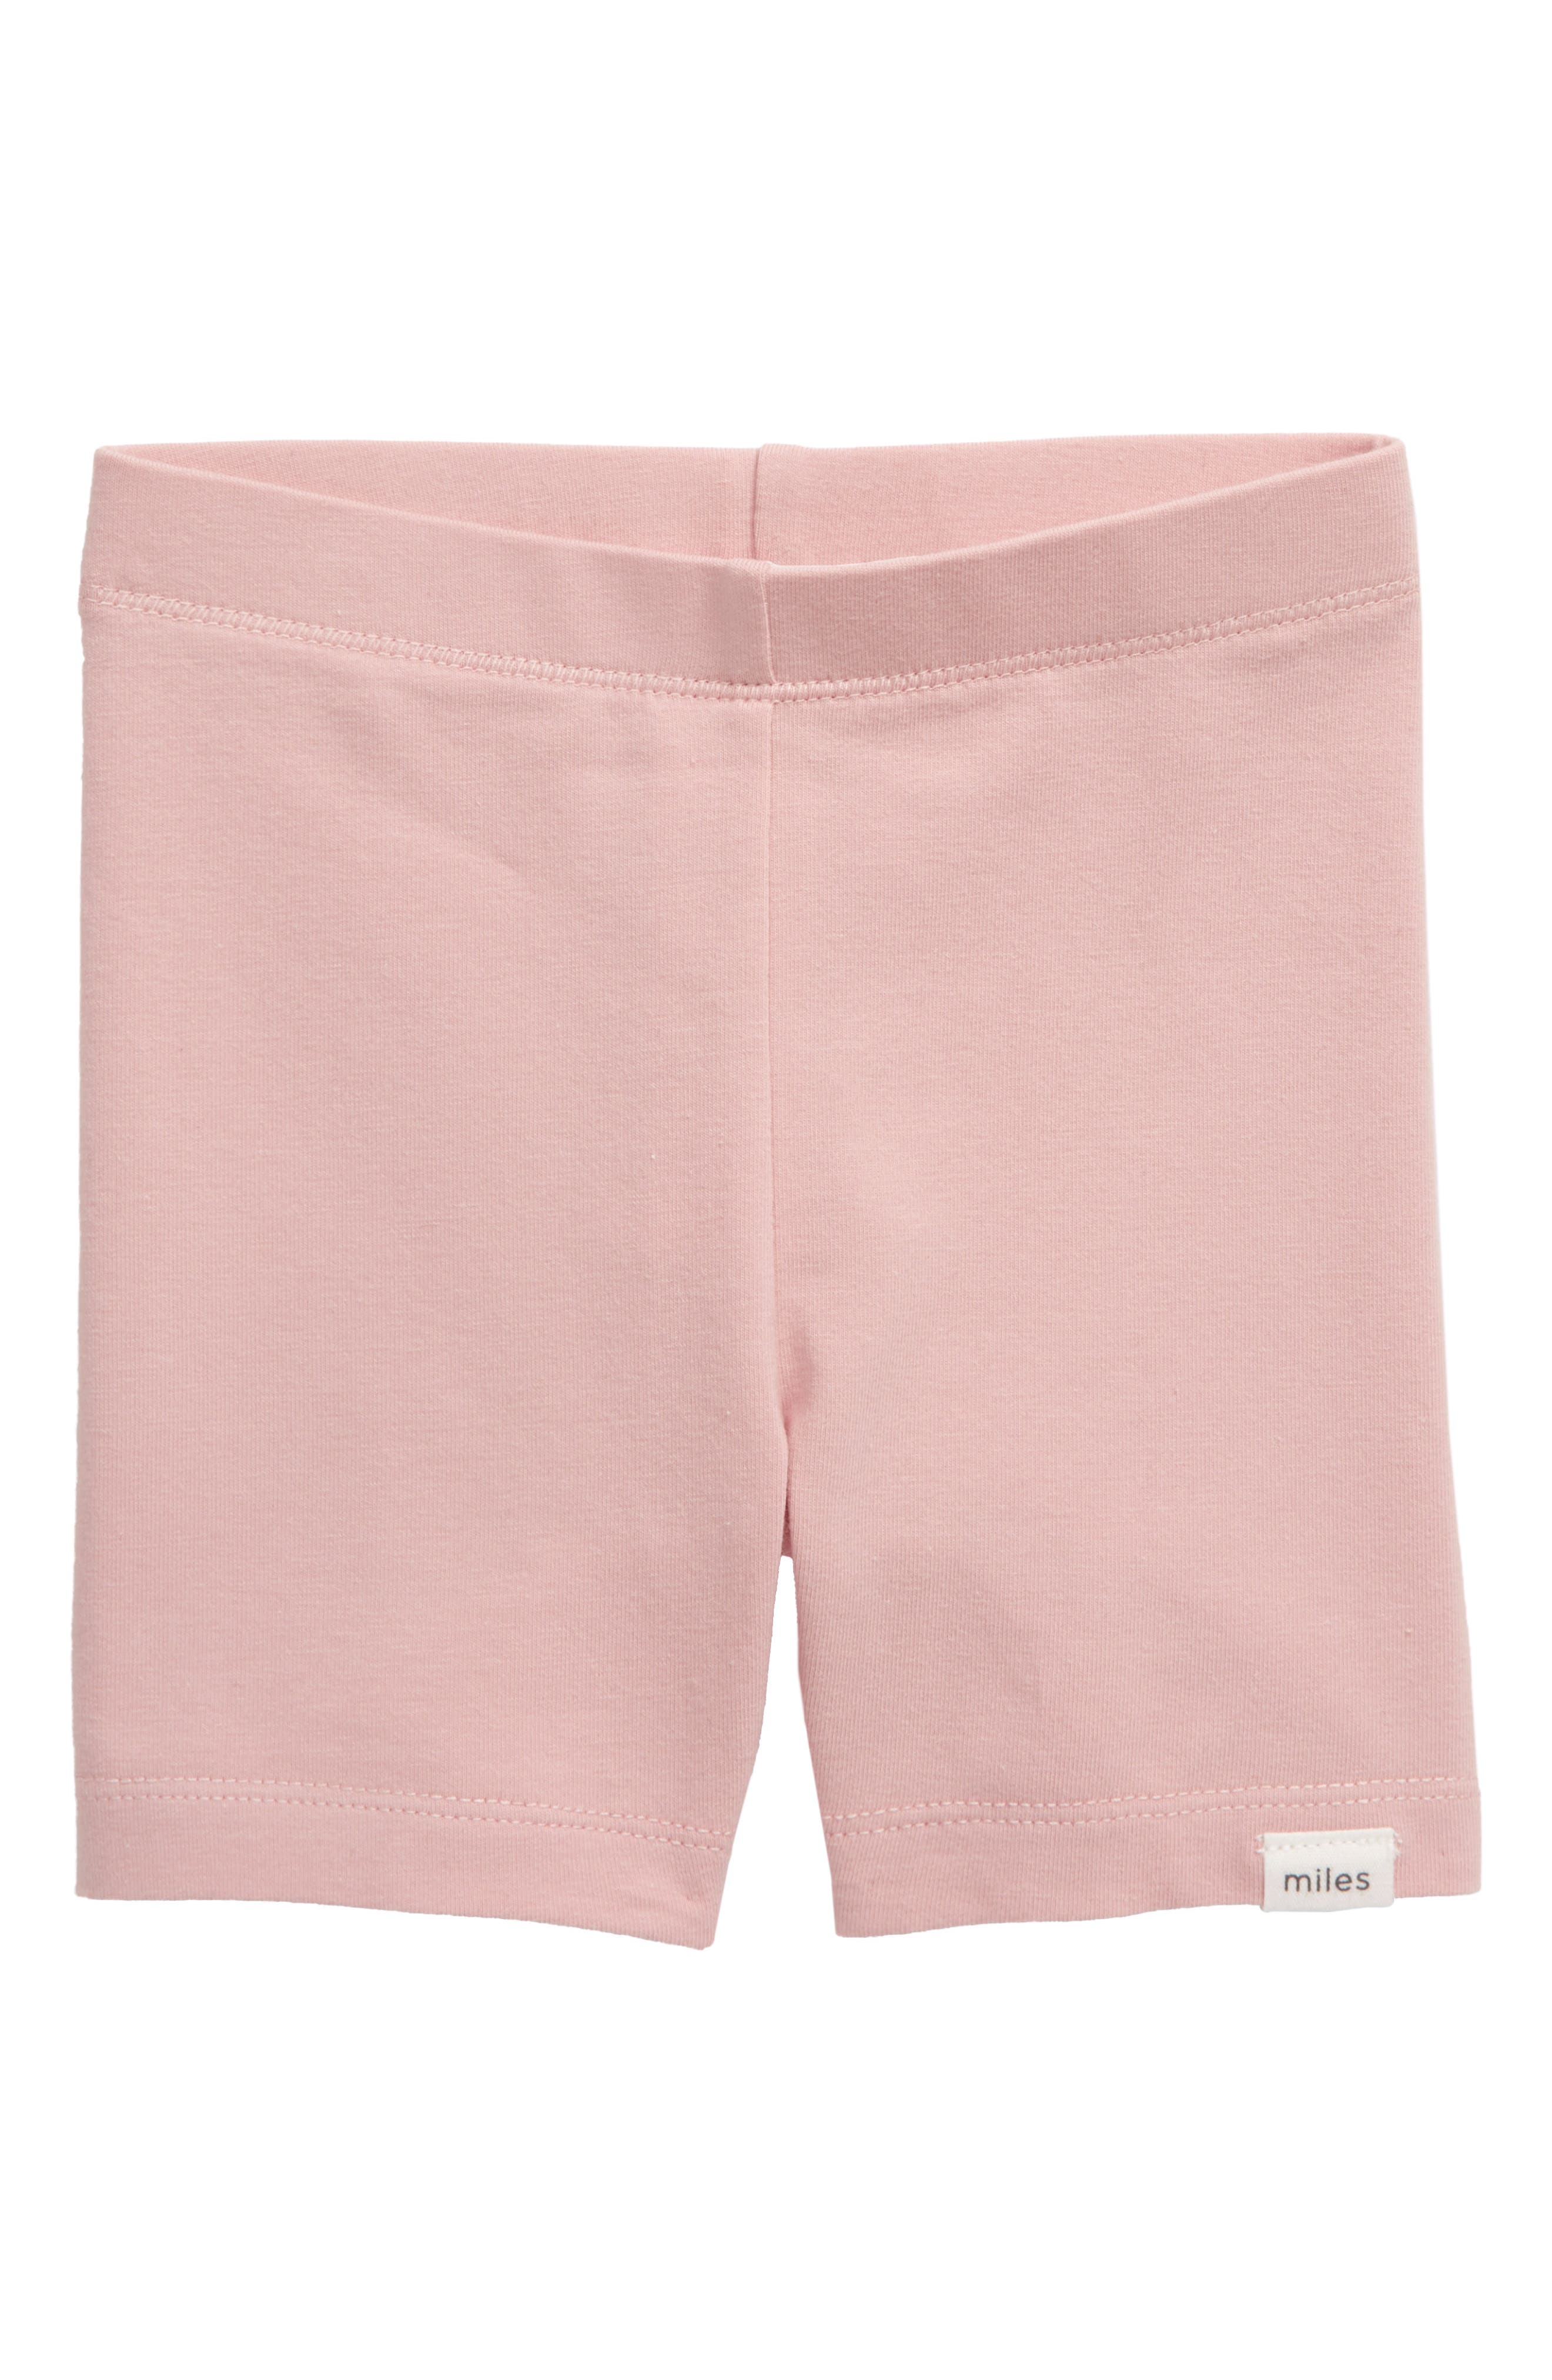 light pink bike shorts